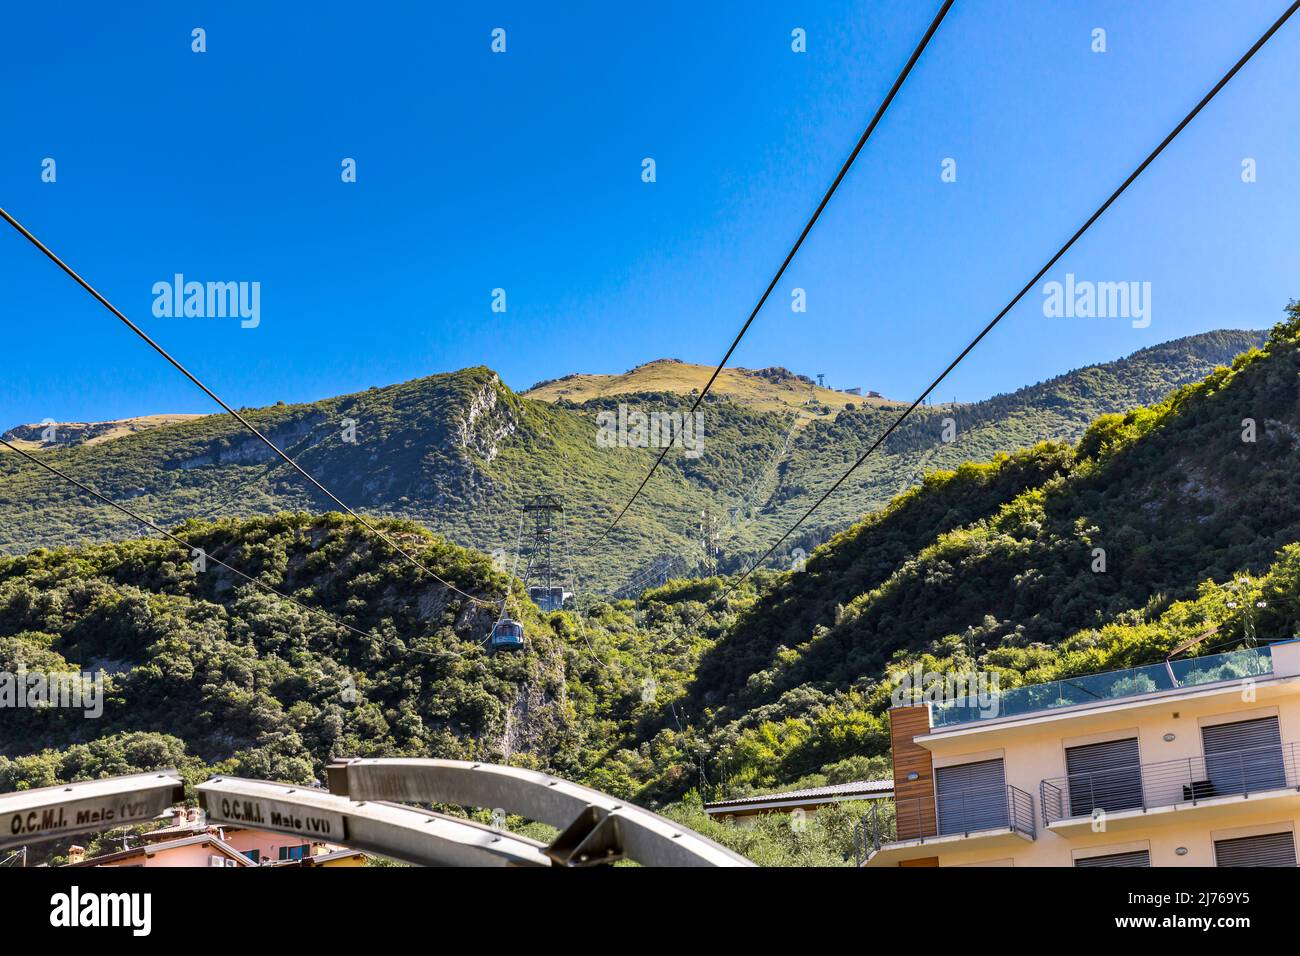 Cable car from Malcesine to Monte Baldo, Malcesine, Lake Garda, Italy, Europe Stock Photo